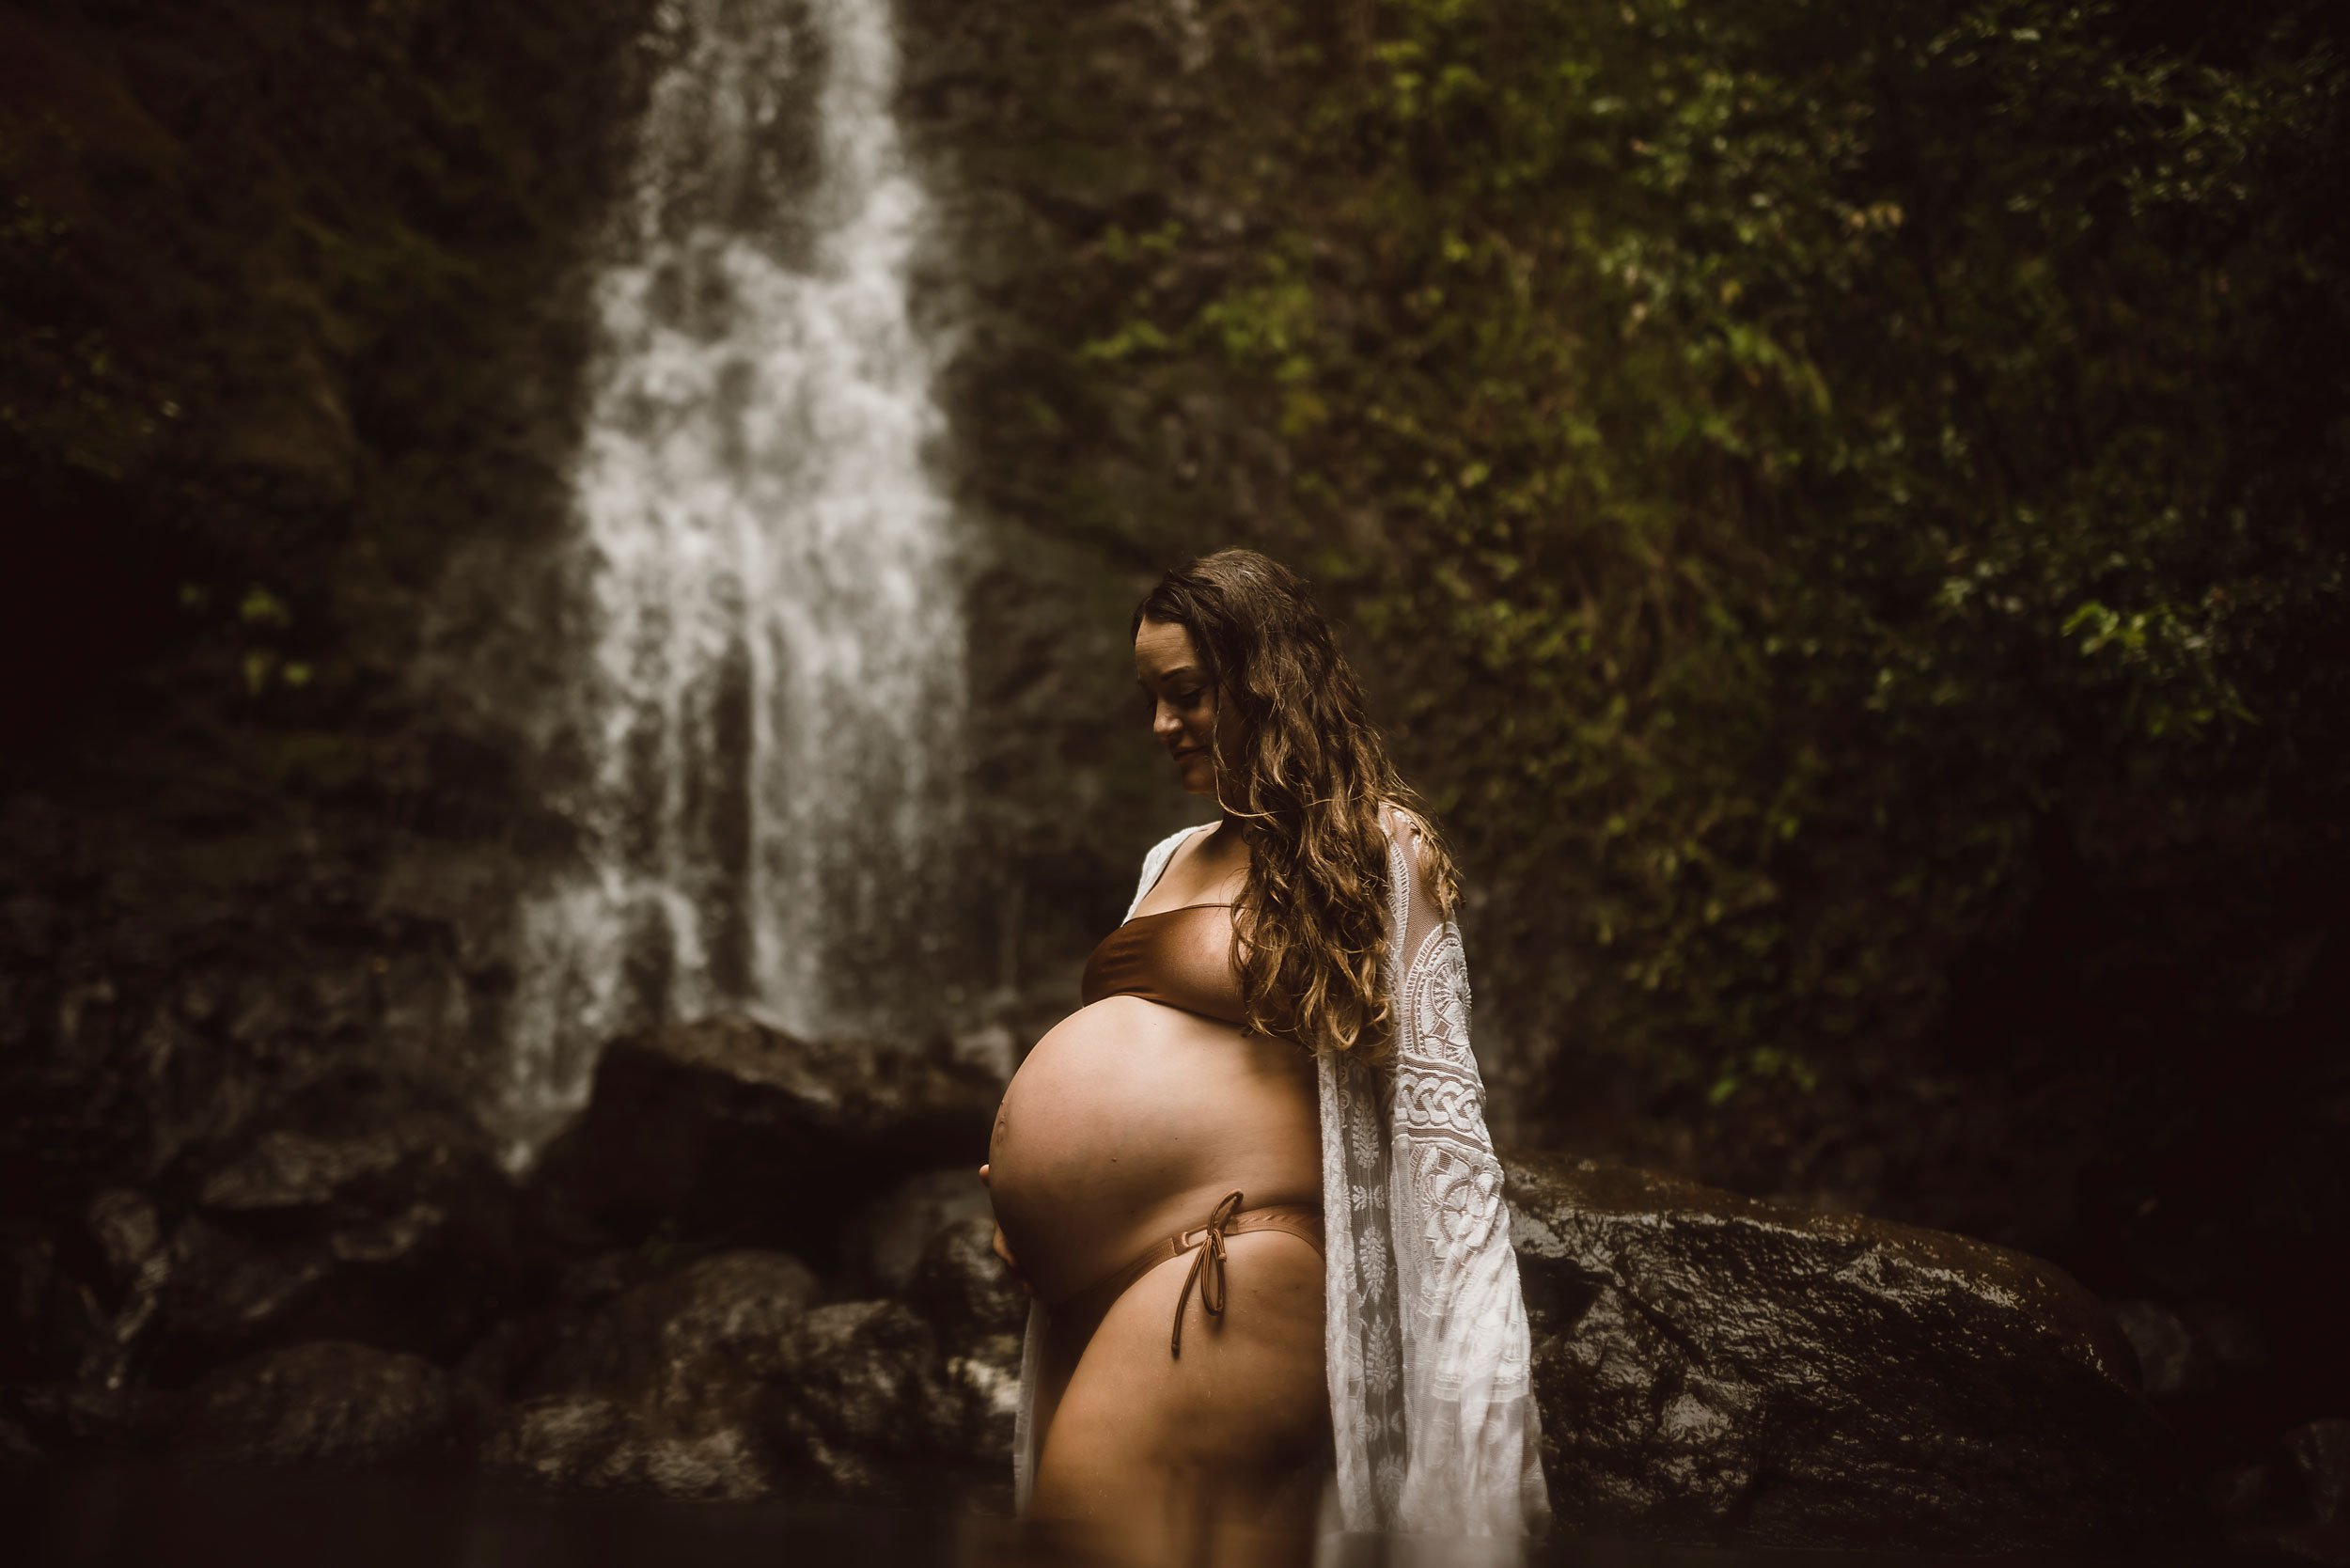 oahu-hawaii-waterfall-maternity-photos-lulumahu-05.jpg